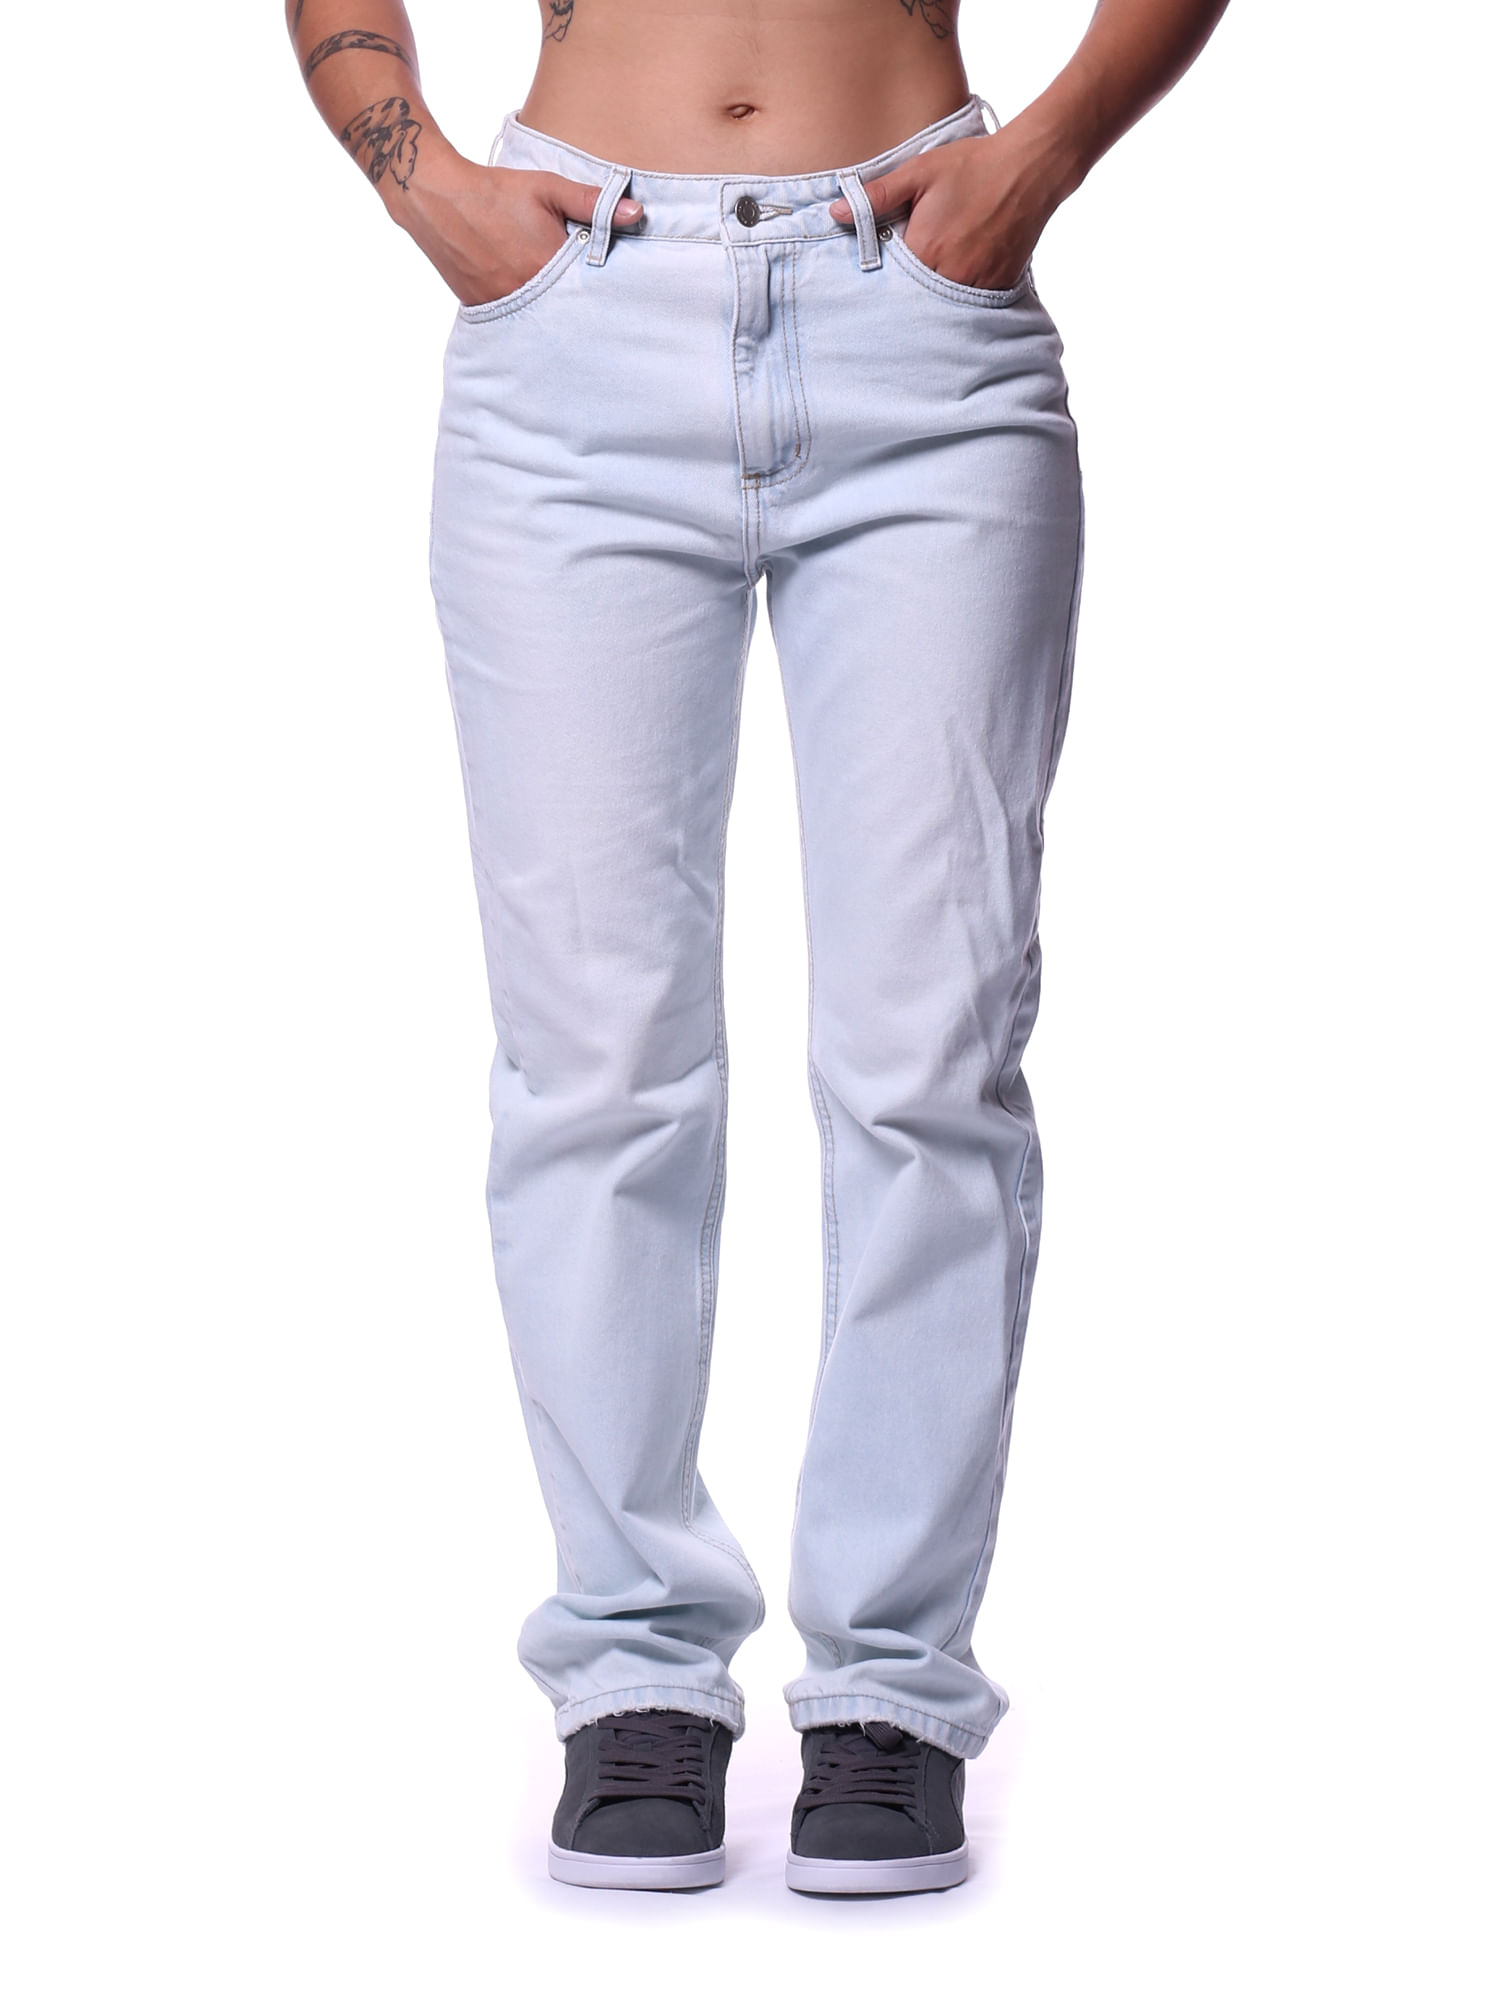 Calca-bali-hai-jeans-slim-feminina-Jeans-claro